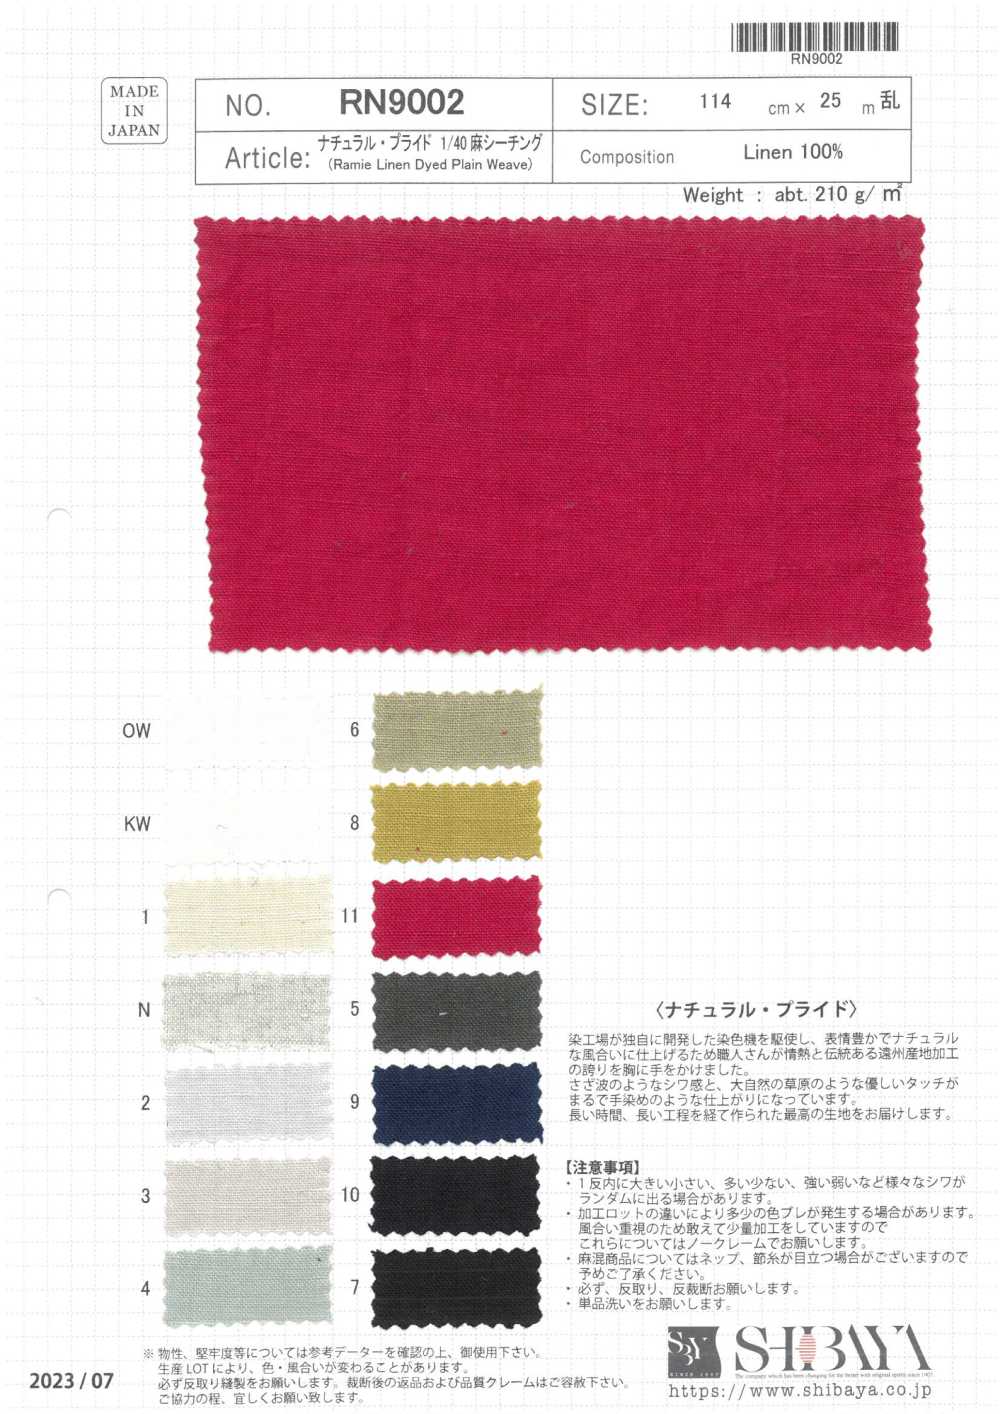 RN9002 Natural Pride 1/40 Linen Loomstate[Textile / Fabric] SHIBAYA